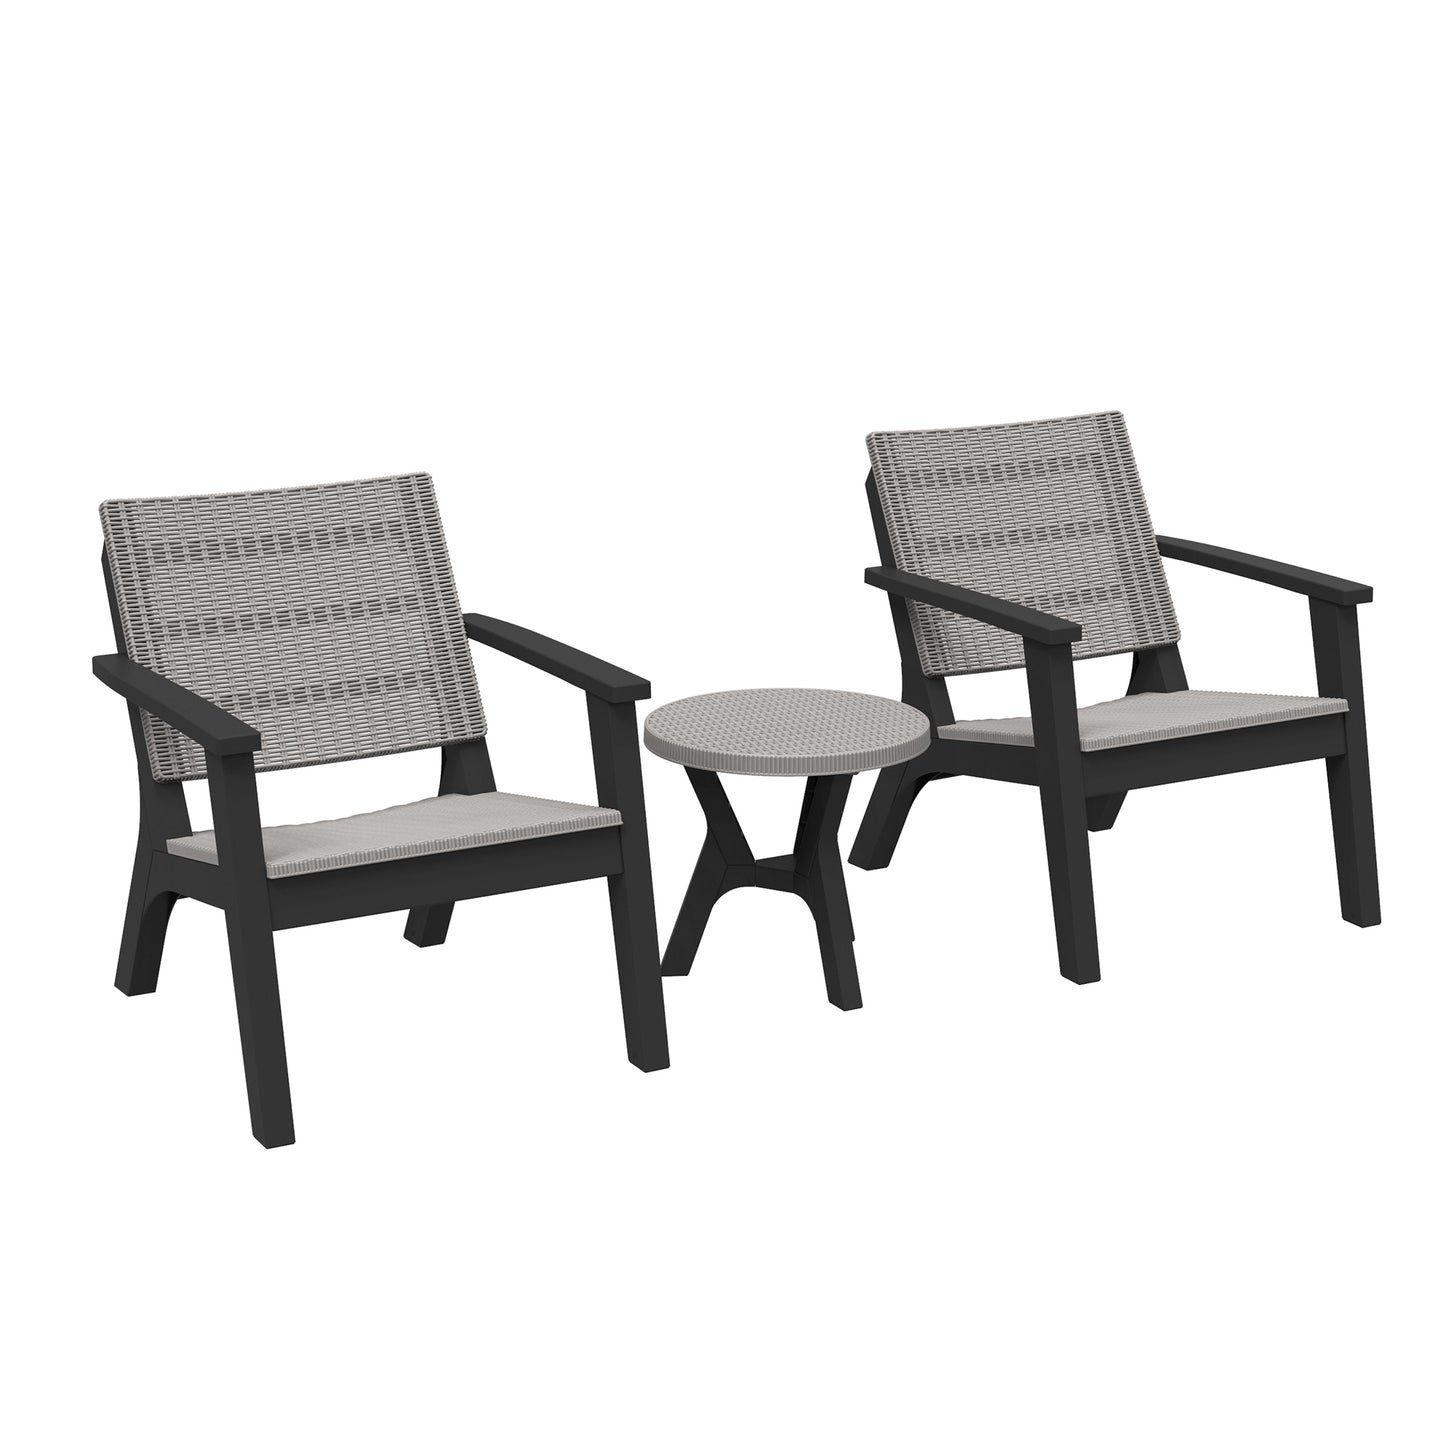 Outsunny 3 PCs Rattan Bistro Set Furniture Arm Chair Table for Patio Porch